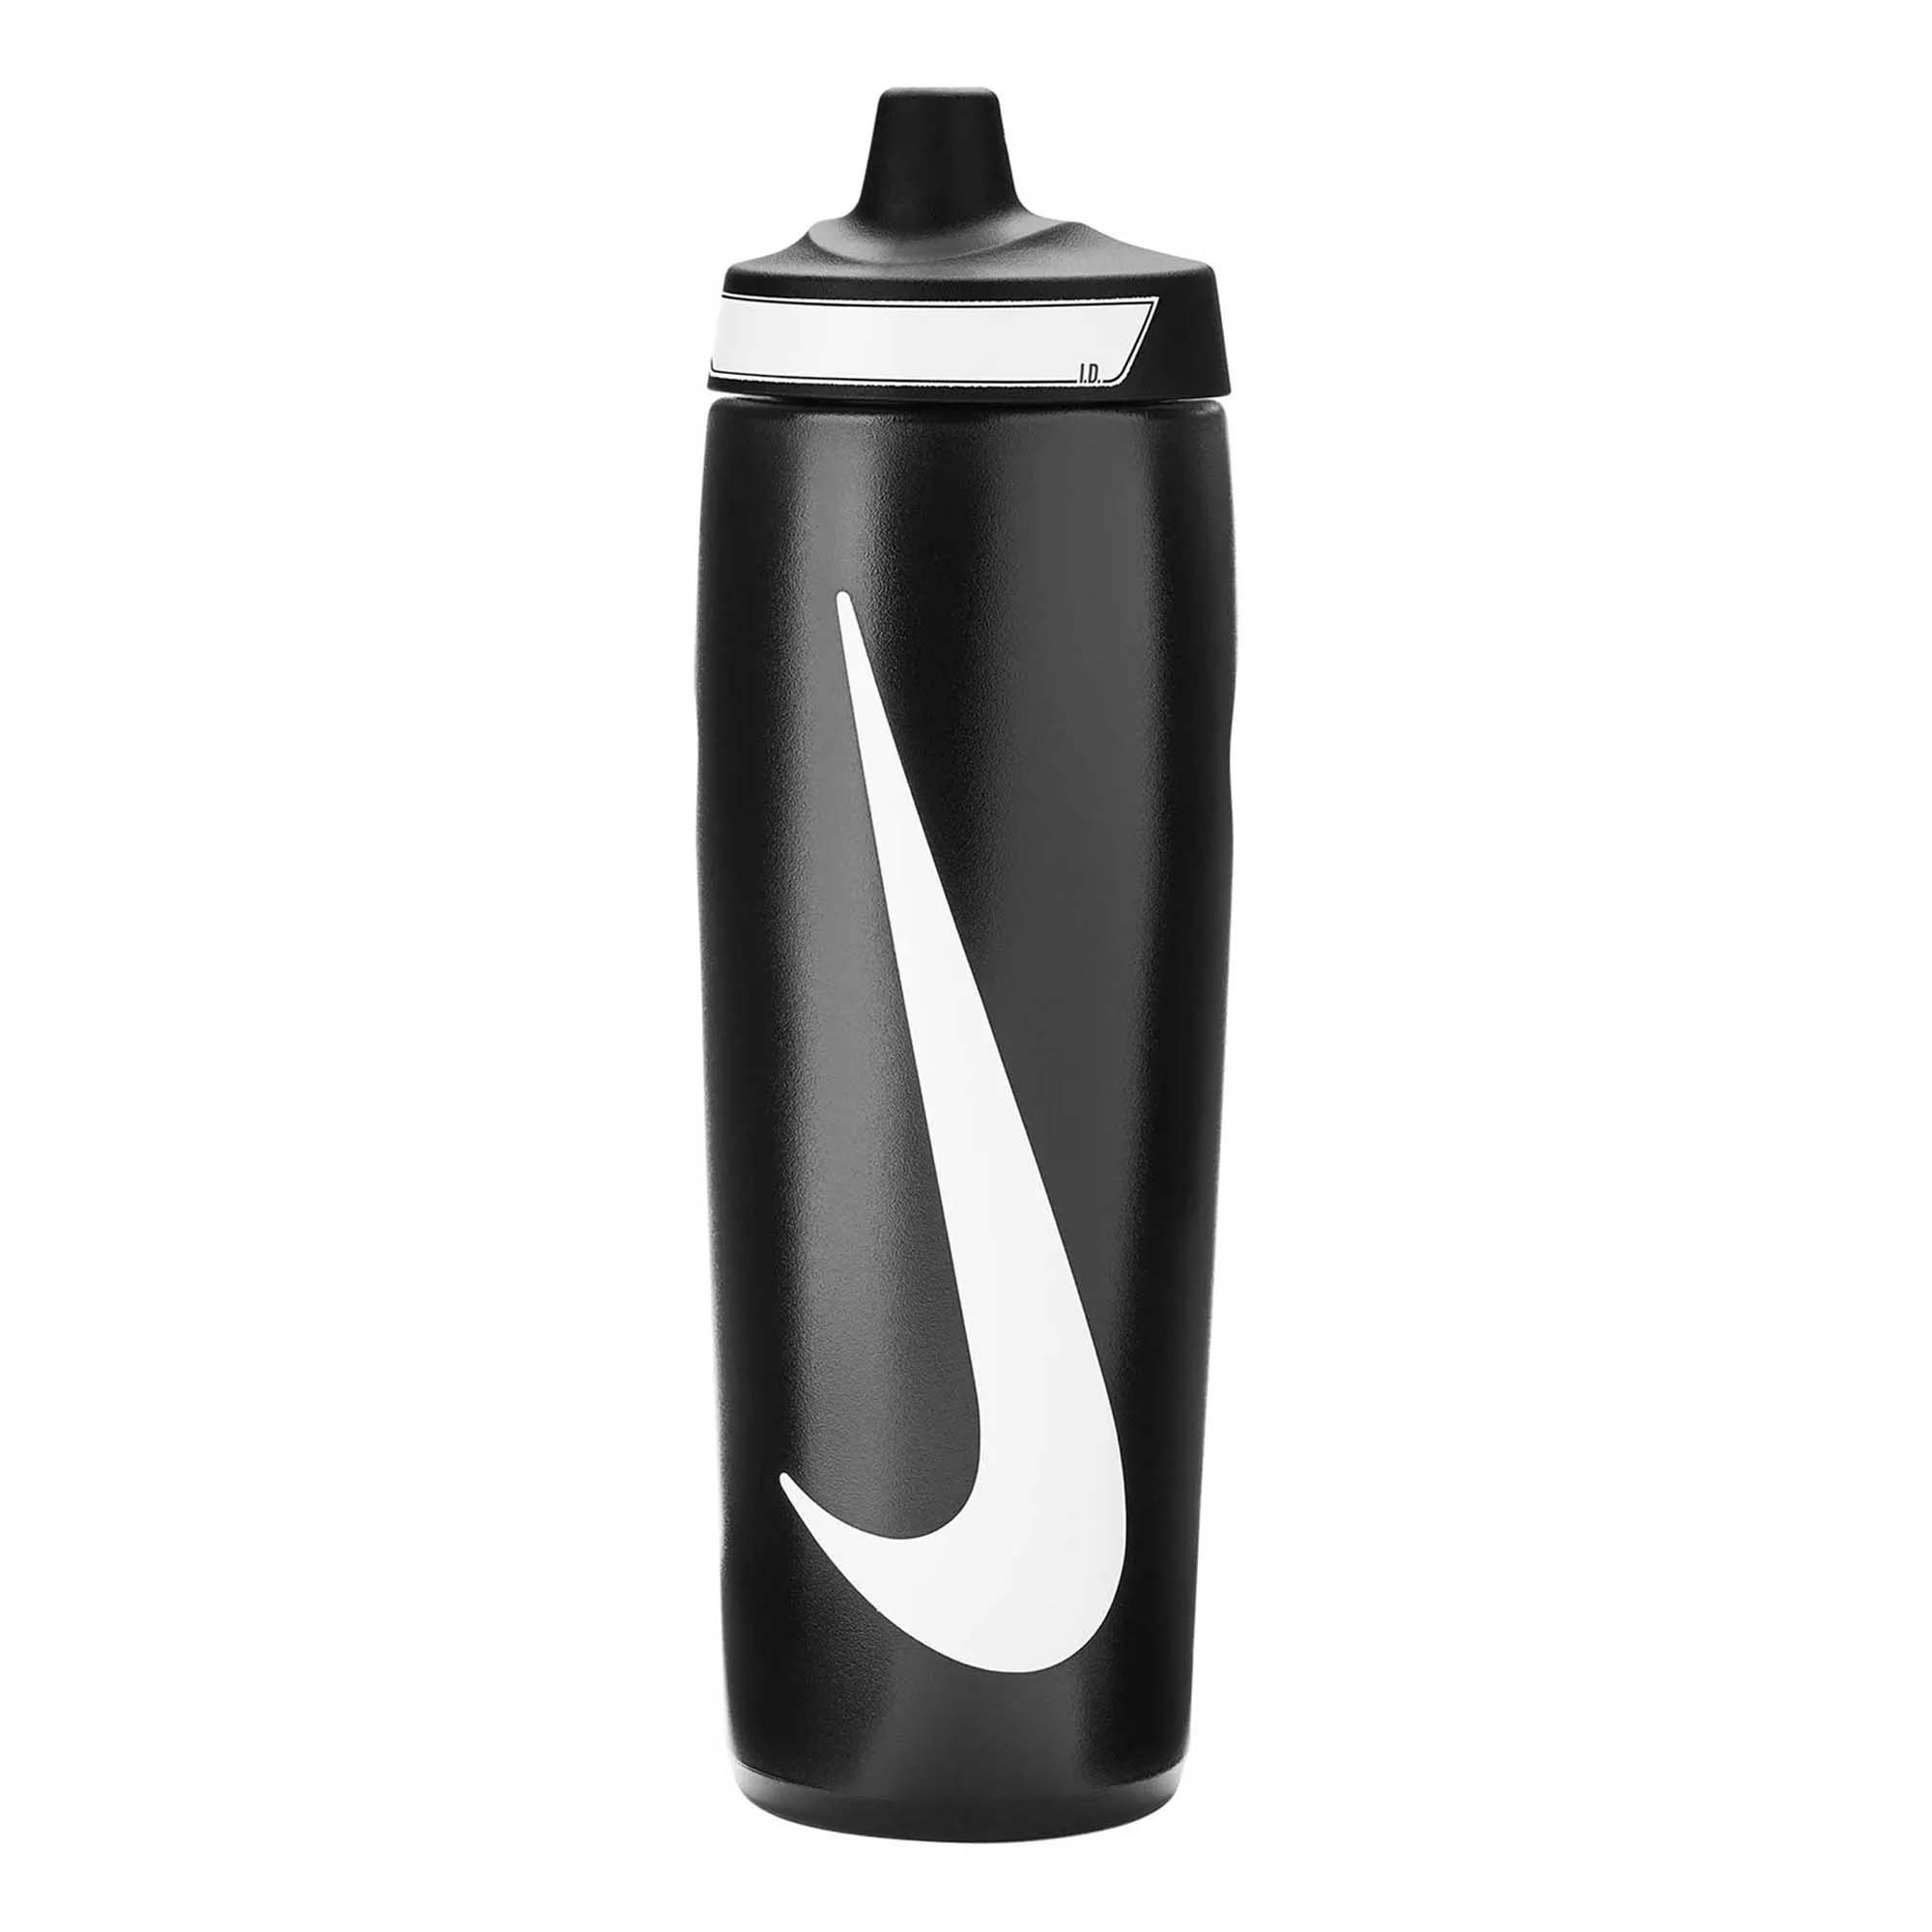 Nike accessoires nike Refuel Bottle Grip 24 oz